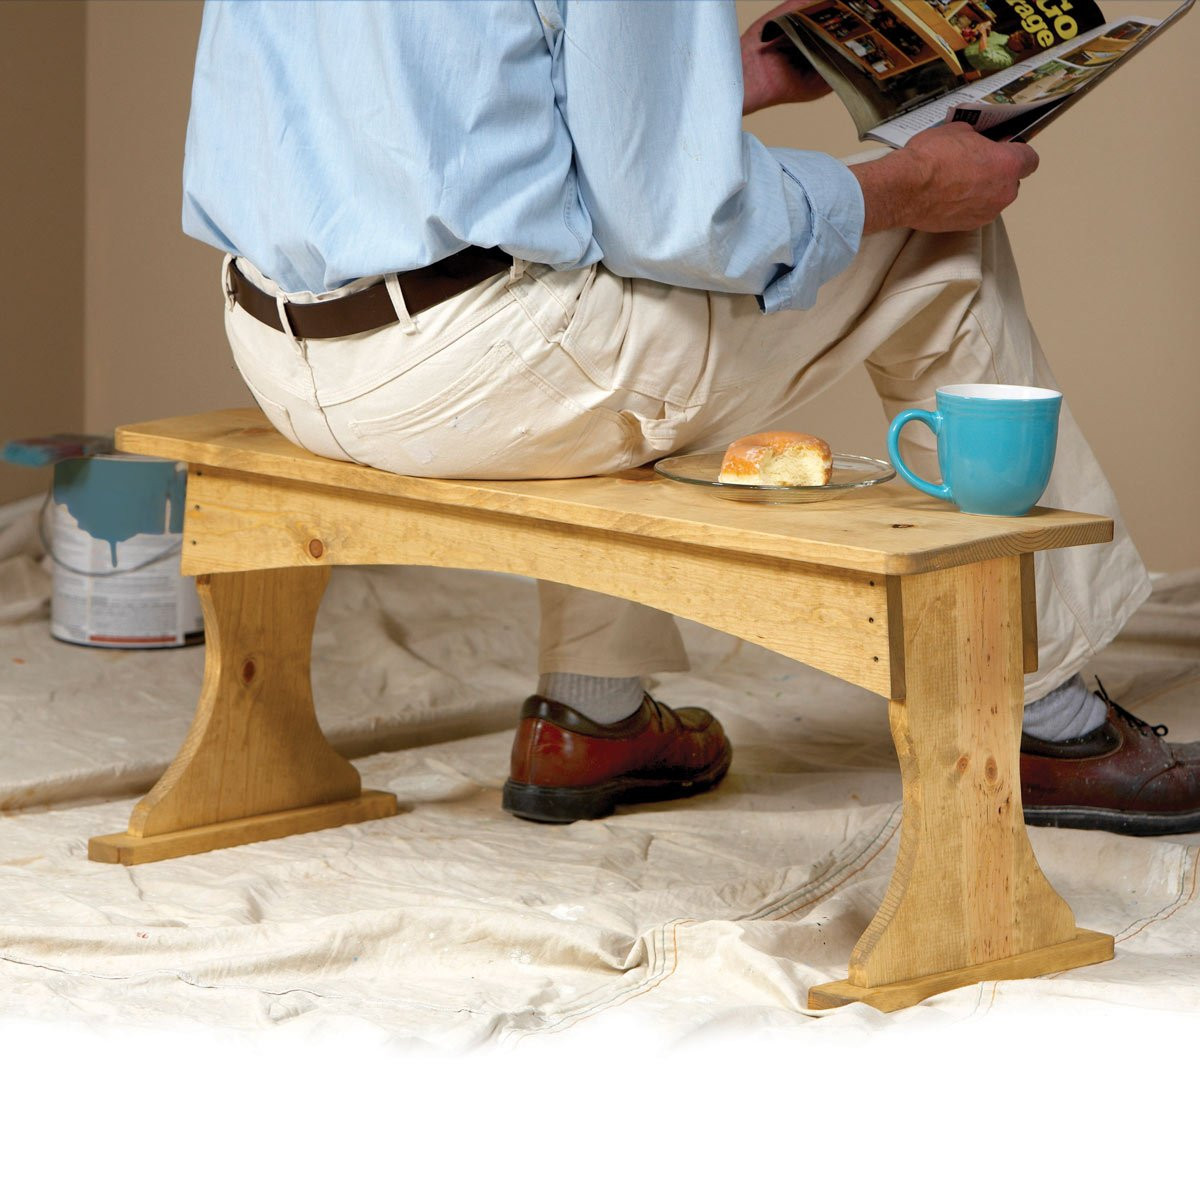 DIY Wood Projects
 The Top 10 DIY Wood Projects — The Family Handyman